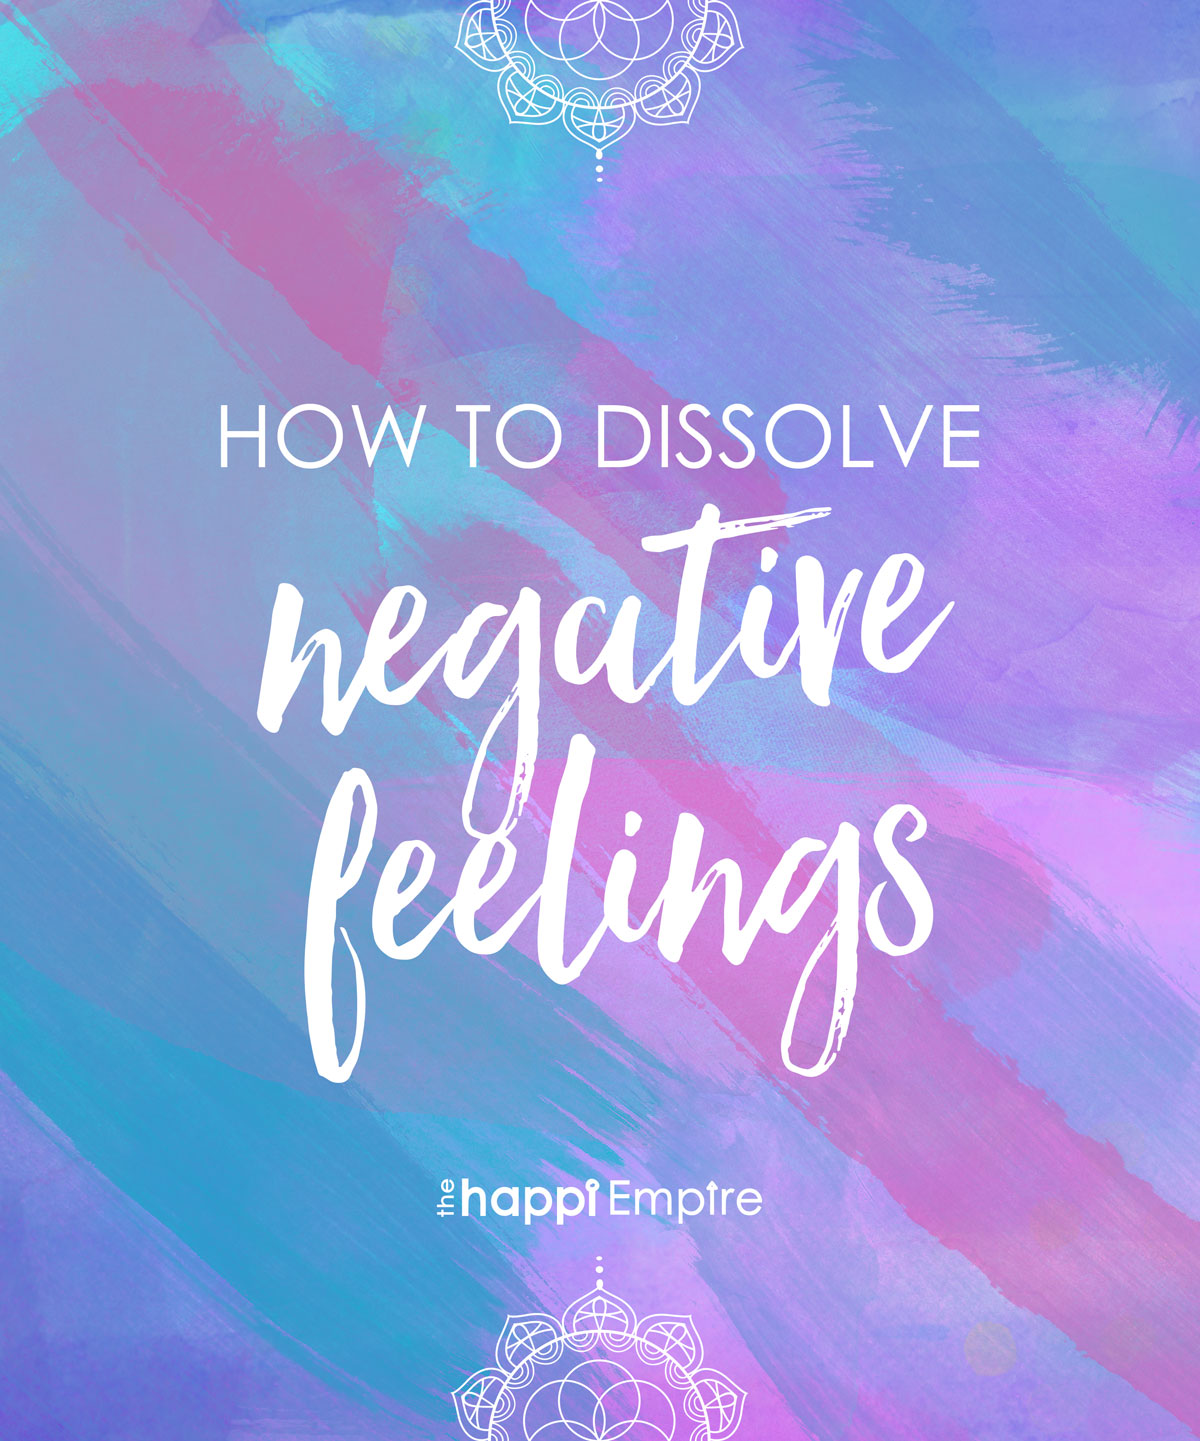 How to dissolve negative feelings